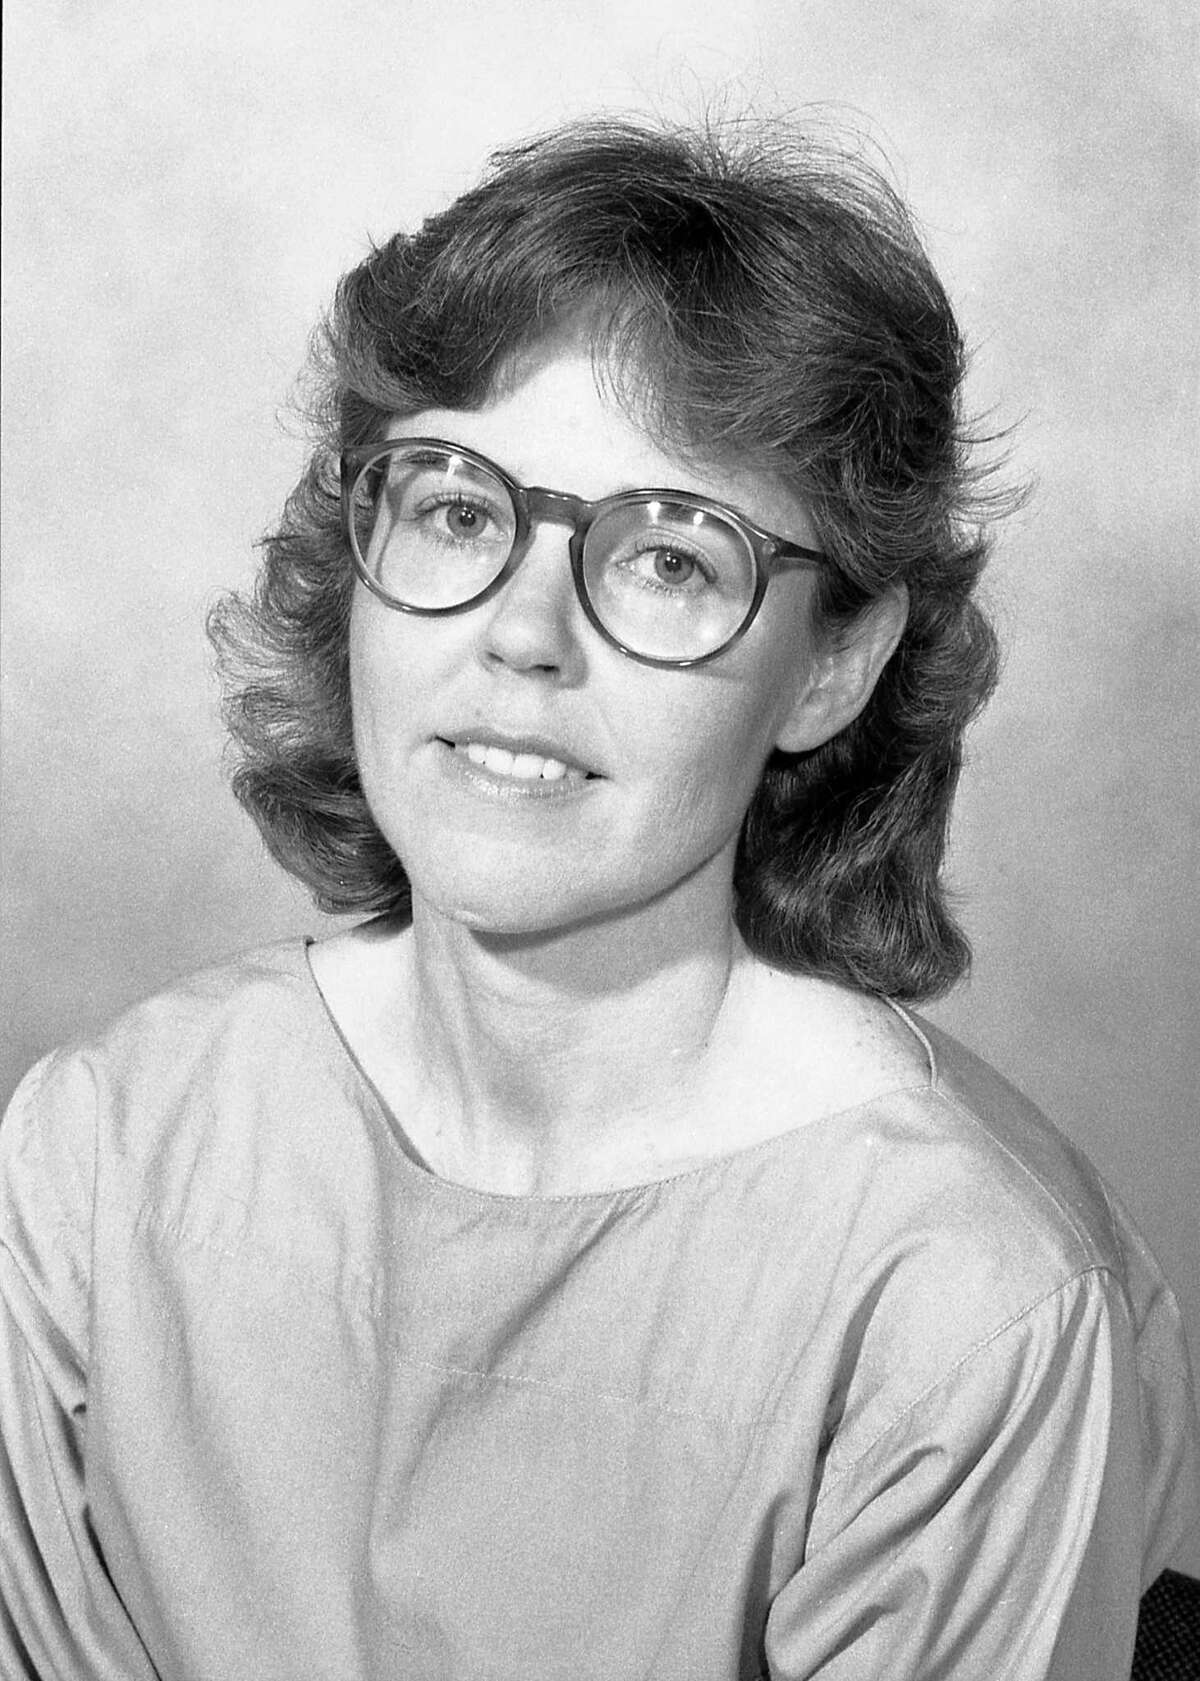 Kathy Huber in 1986.